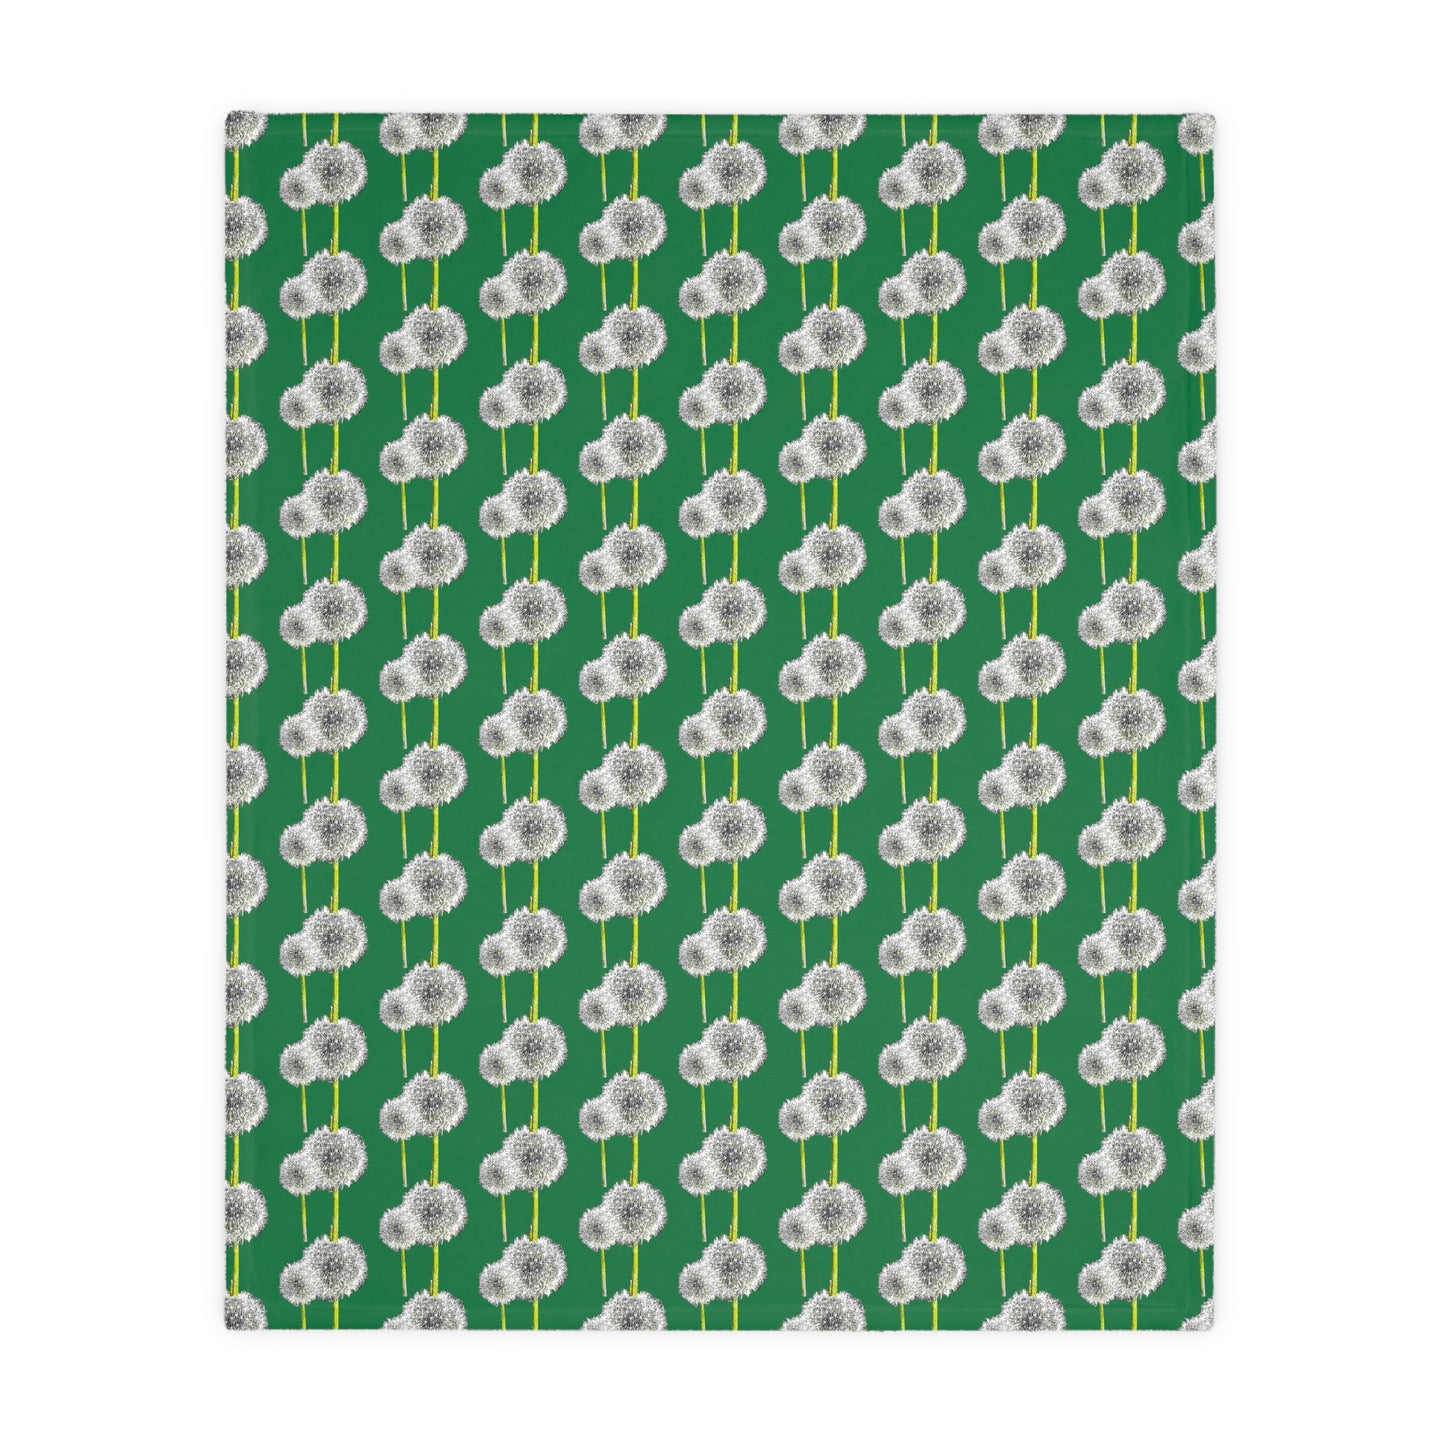 Dandelion Blanket (Two-sided print)